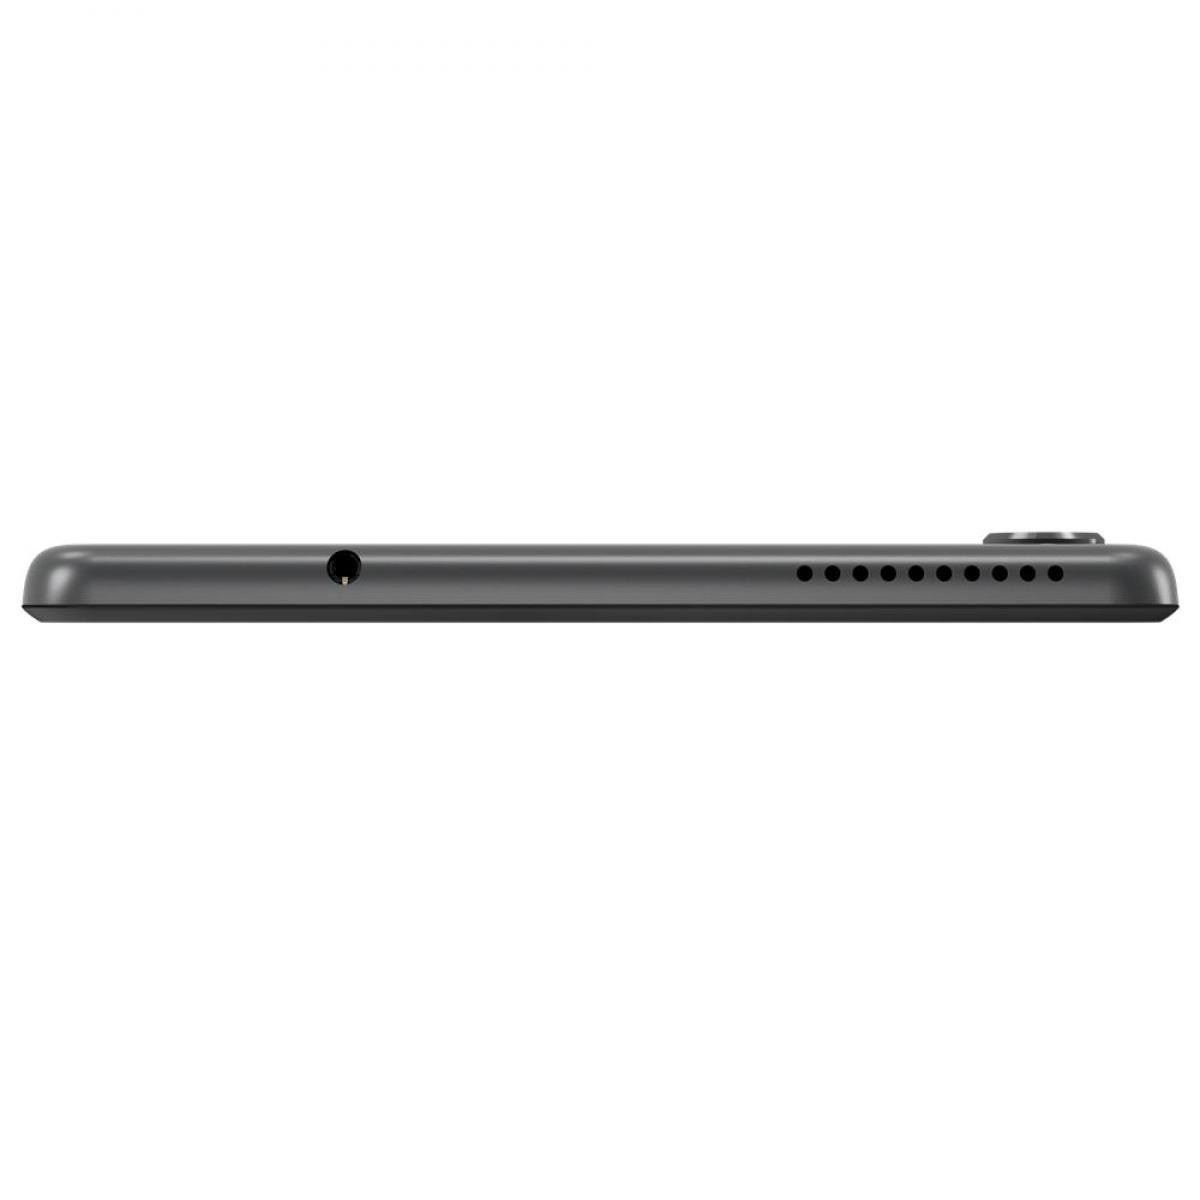 Lenovo - LENOVO TABLETTE SMART M8 TB-8505F MediaTek A22 Quad-Core 2.0GHZ 2GB, 32GB eMMC - Tablette Android